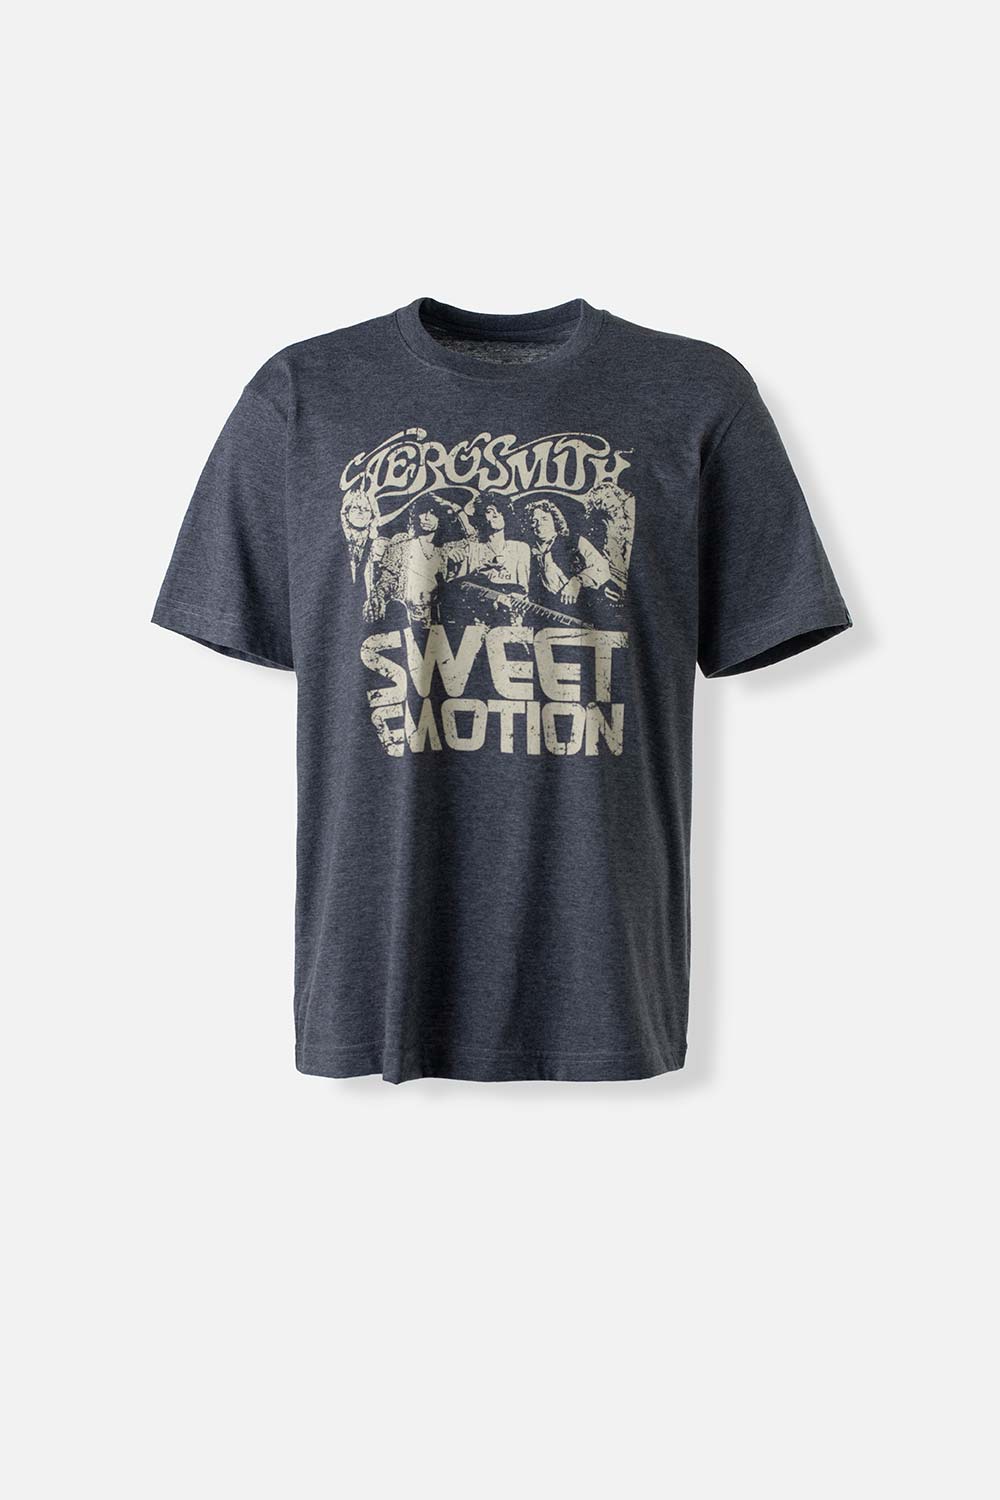 Camiseta de Aerosmith, manga corta gris para Hombre S-0